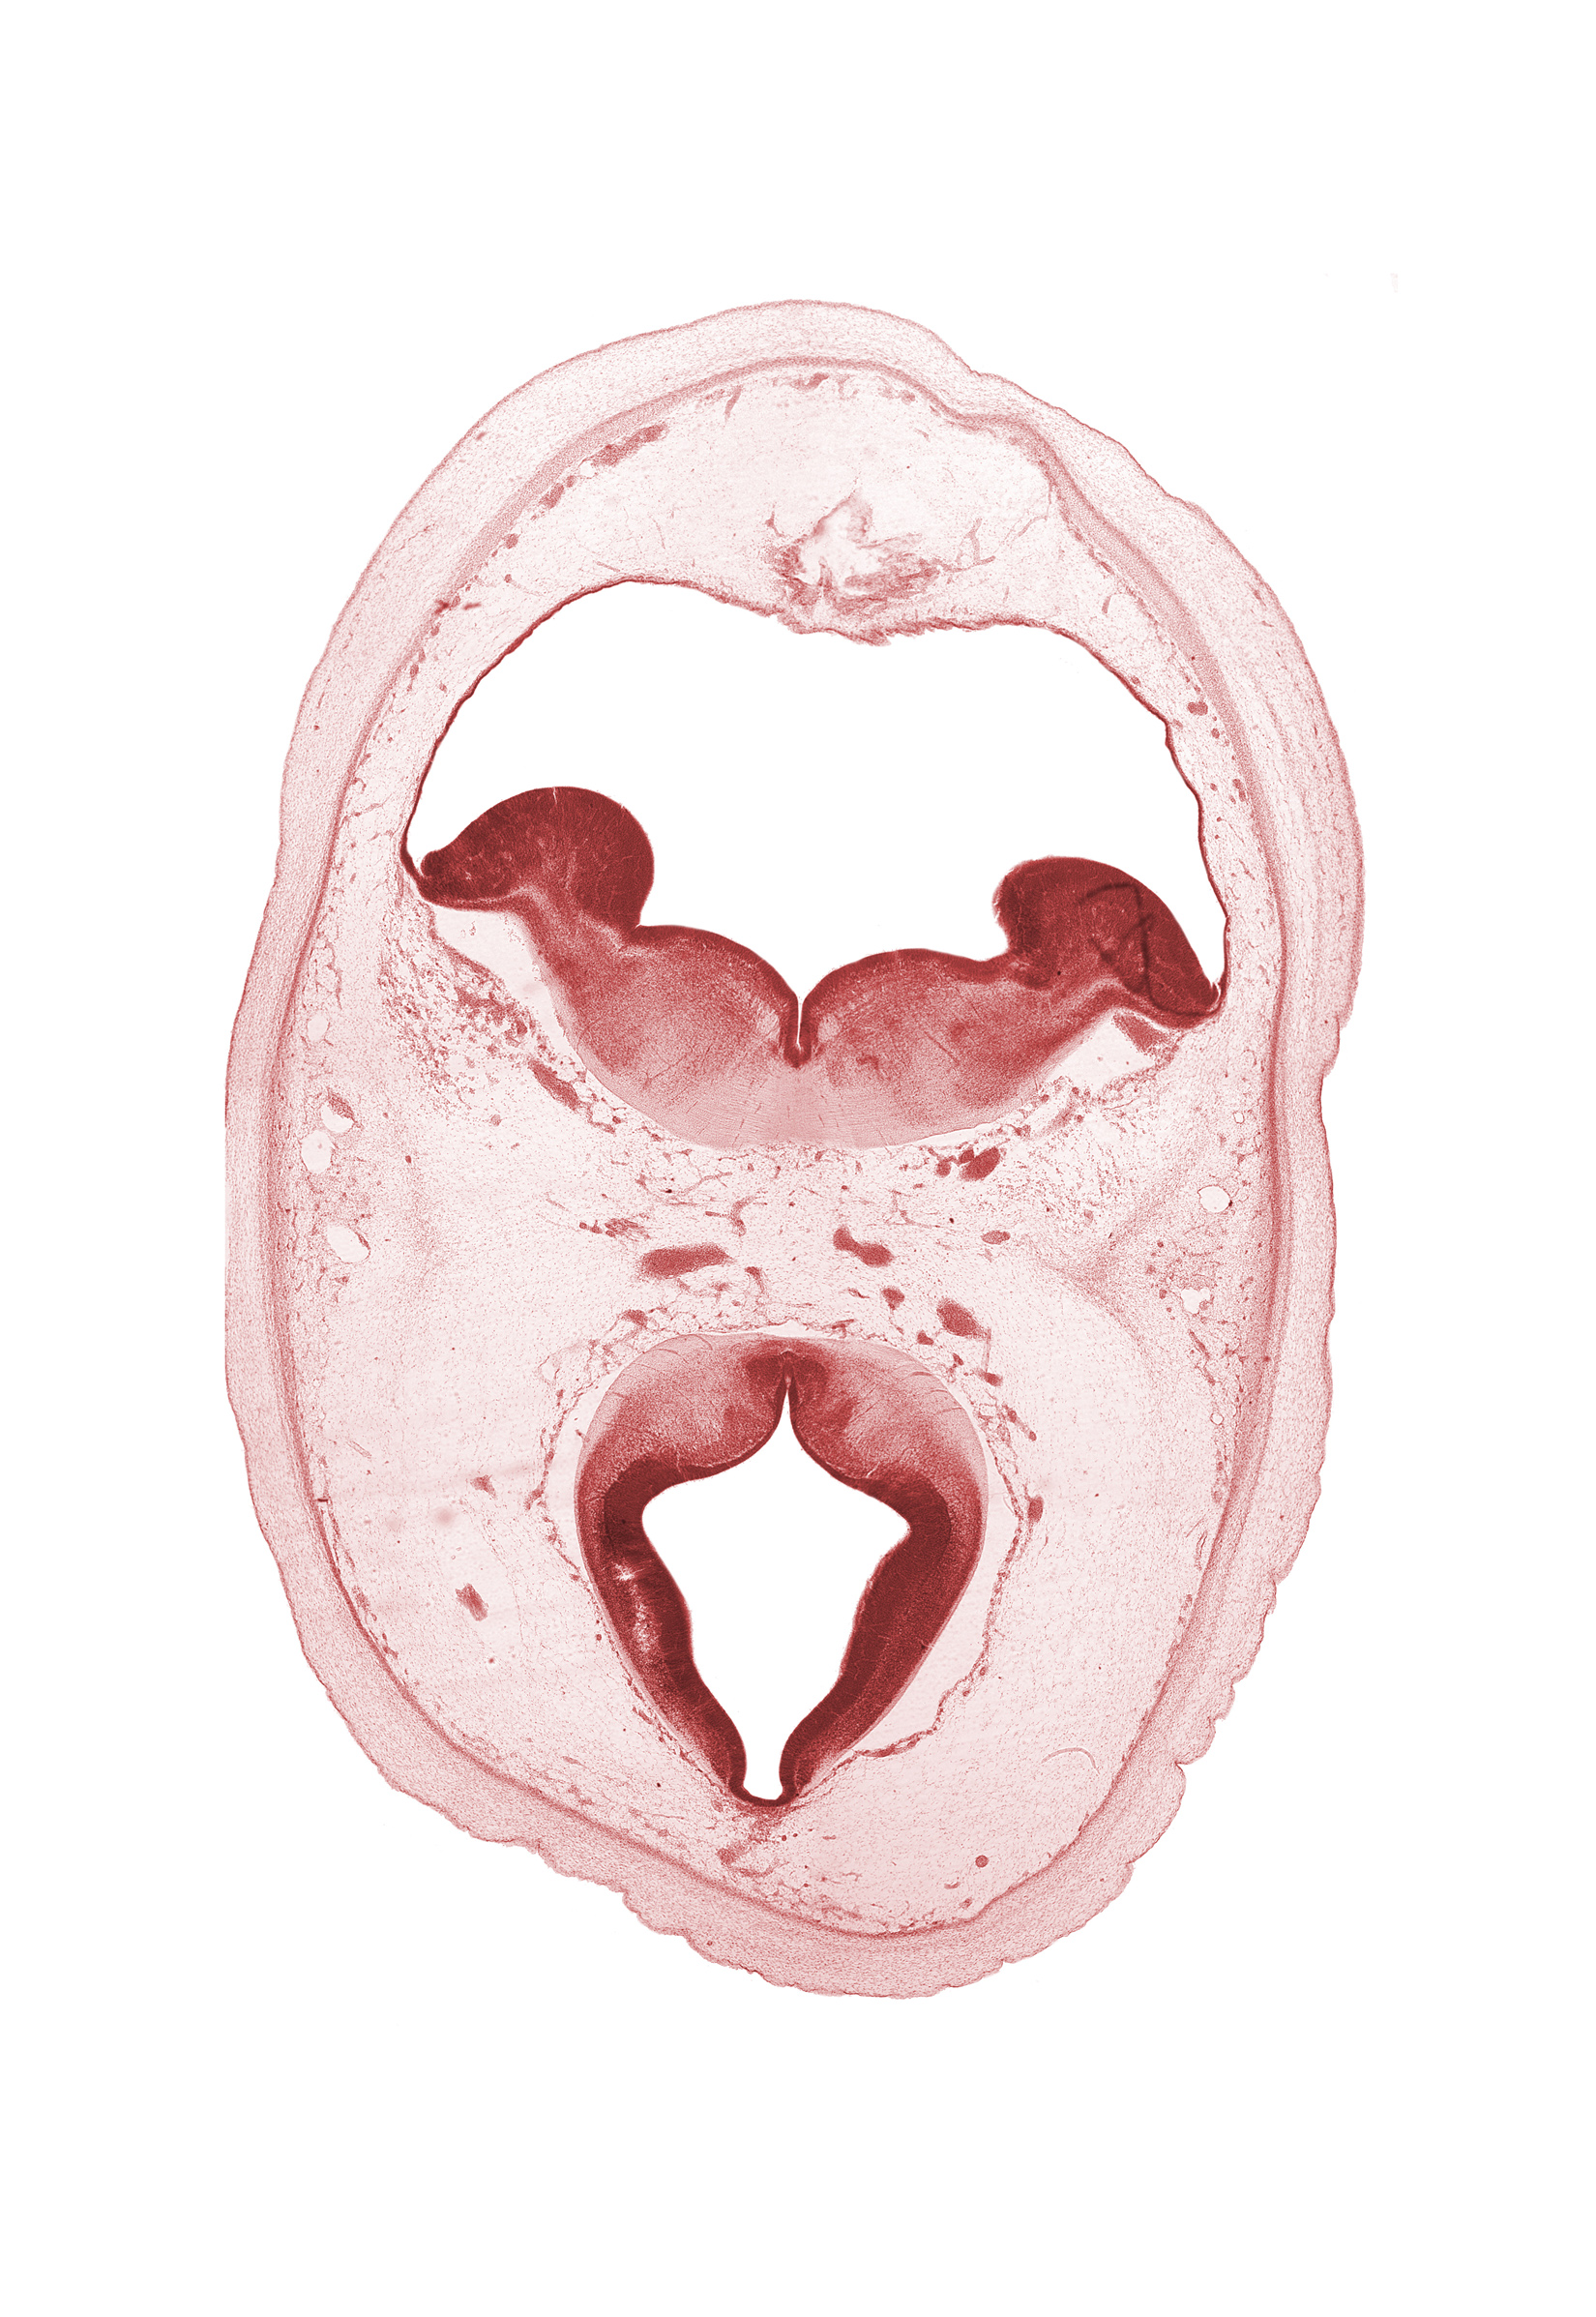 artifact separation(s), basis pedunculi of pons region (metencephalon), diencephalon, dorsal thalamus, edge of ependymal diverticulum of rhombencoel (fourth ventricle), hypothalamic sulcus, metencephalon, oculomotor nerve (CN III), osteogenic layer, posterior cerebral artery, roof of rhombencoel (fourth ventricle), sulcus dorsalis, trochlear nerve (CN IV)